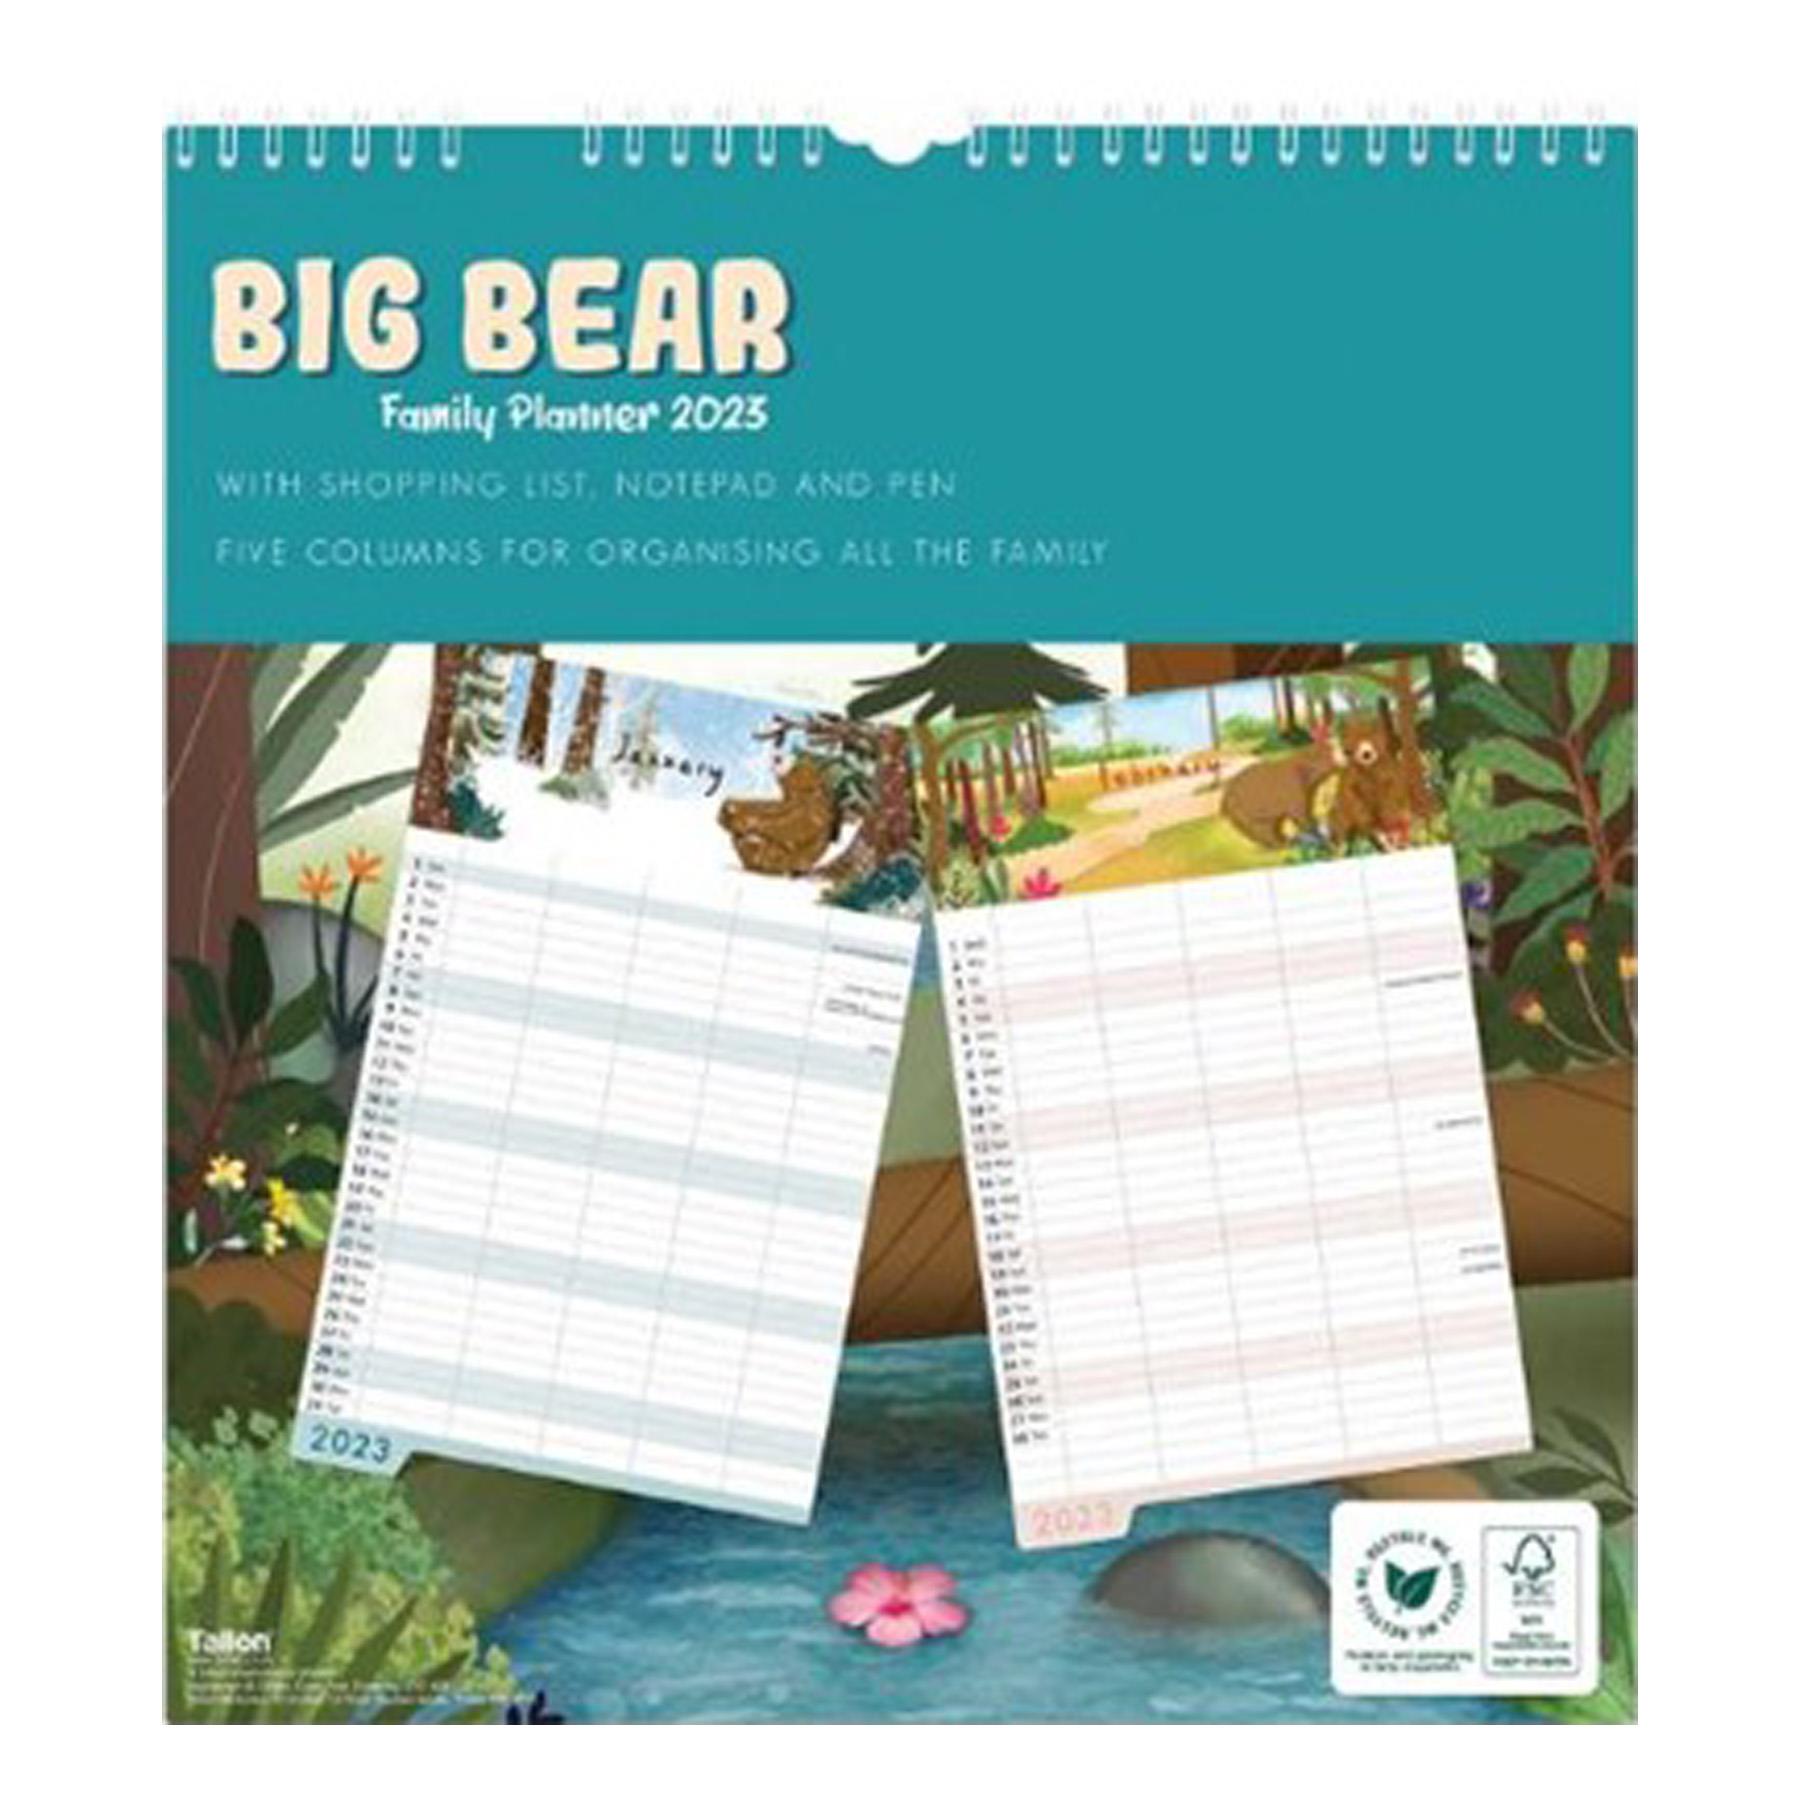 2023 Family Organiser Calendar - Shopping List, Memo Pad and Pen - Bears in the Wood